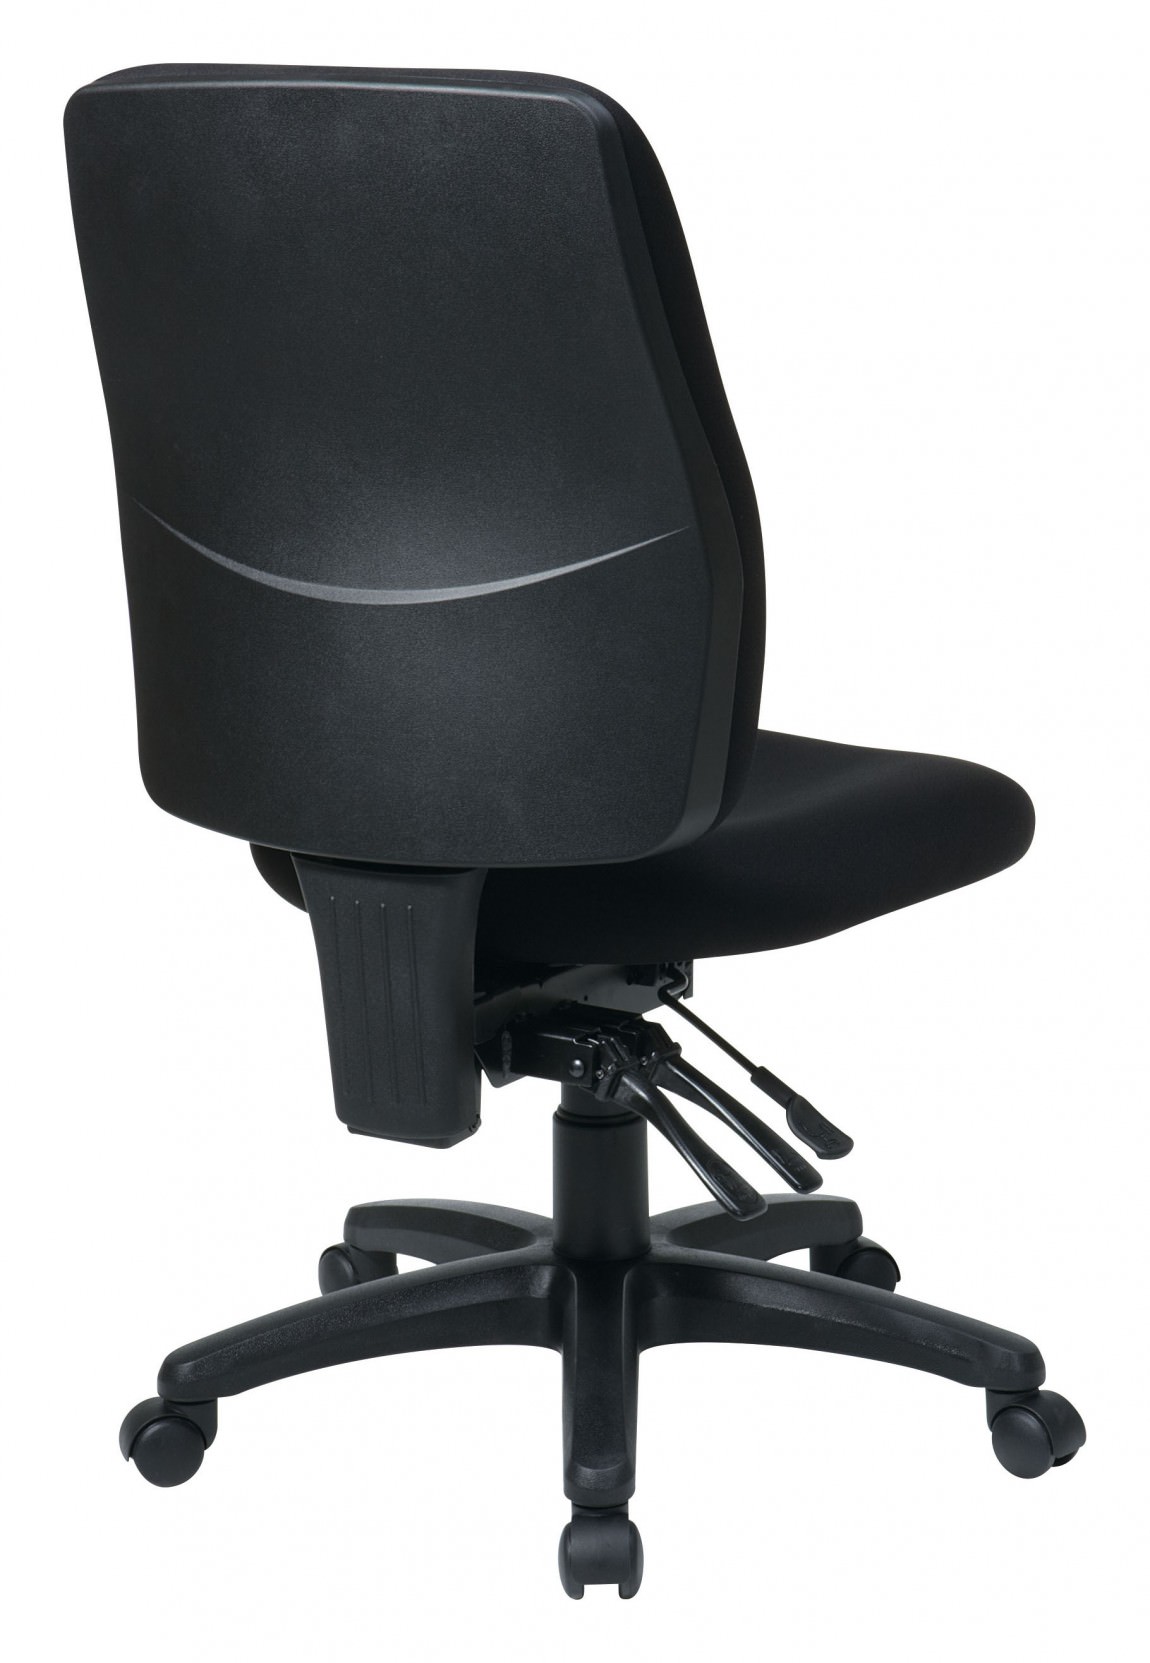 https://madisonliquidators.com/images/p/1150/25937-high-back-ergonomic-chair-without-arms-3.jpg